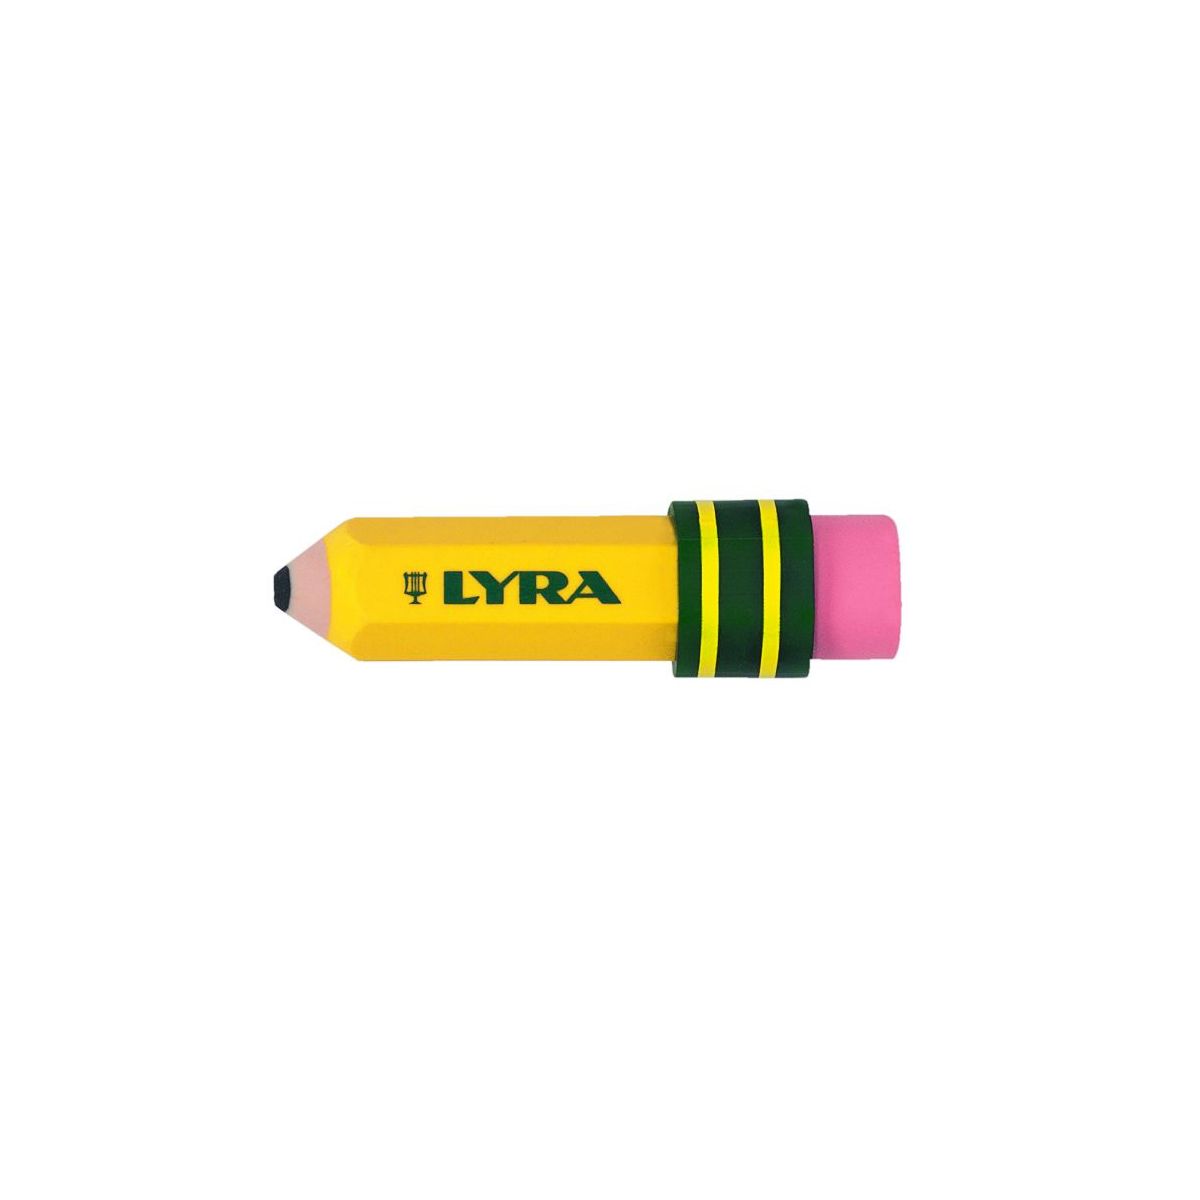 Gumka do mazania Temagraph Lyra (L7417201)